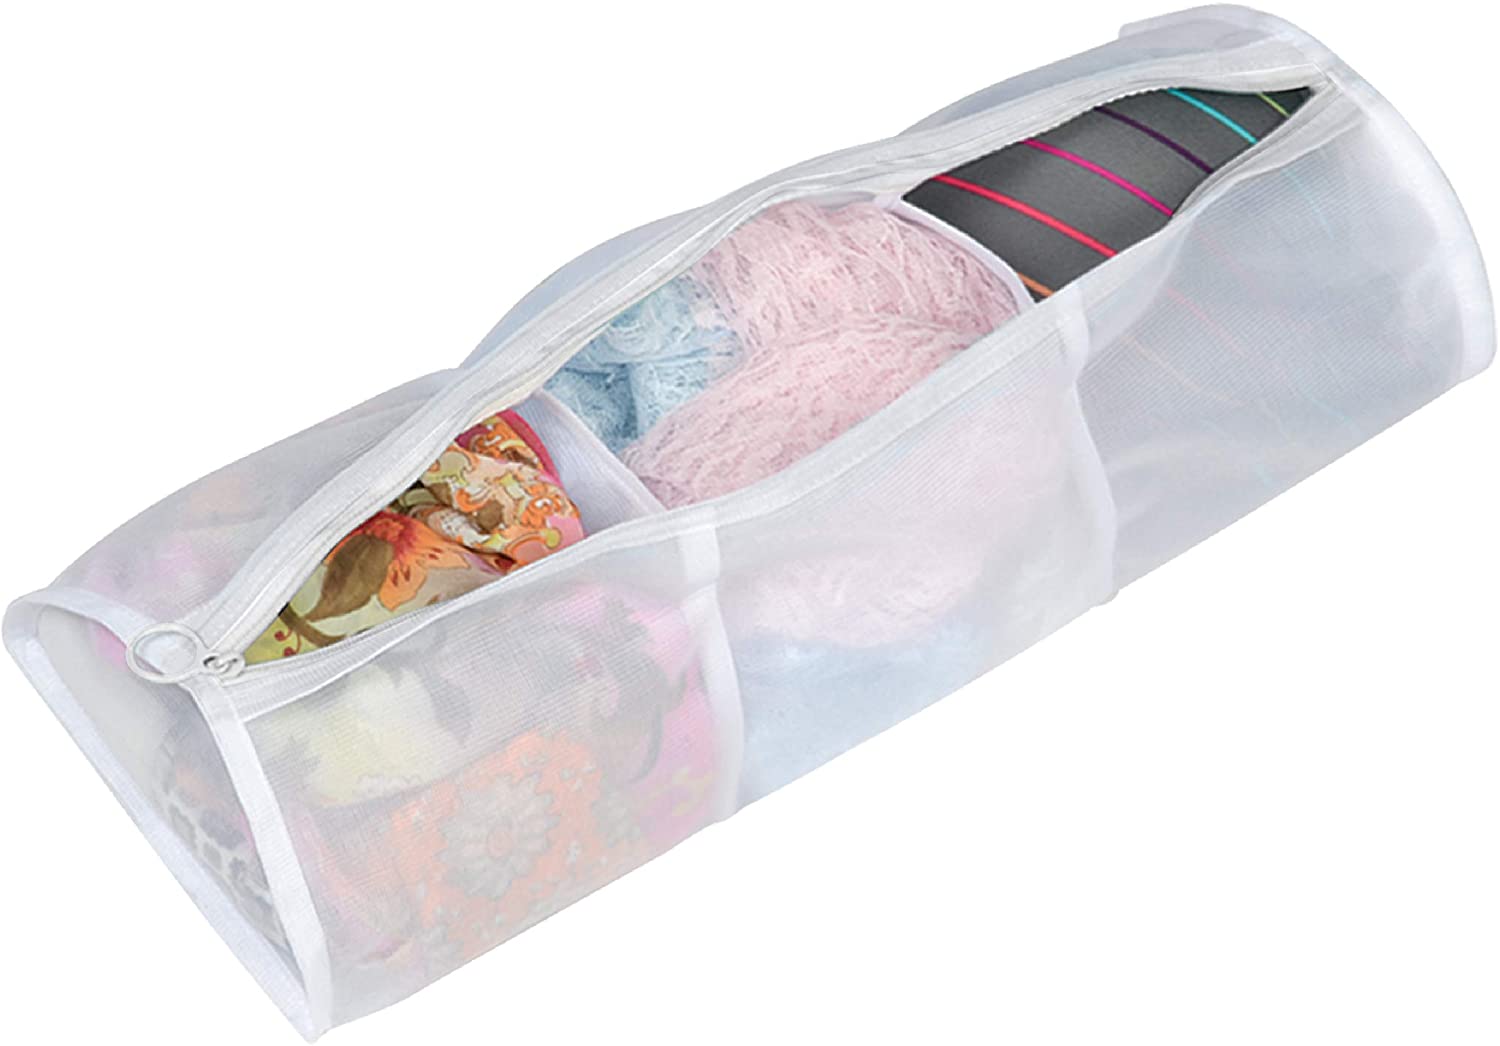 EZY] New Zipped Laundry Washing Bag Laundry Bags Net Mesh Socks Bra Clothes